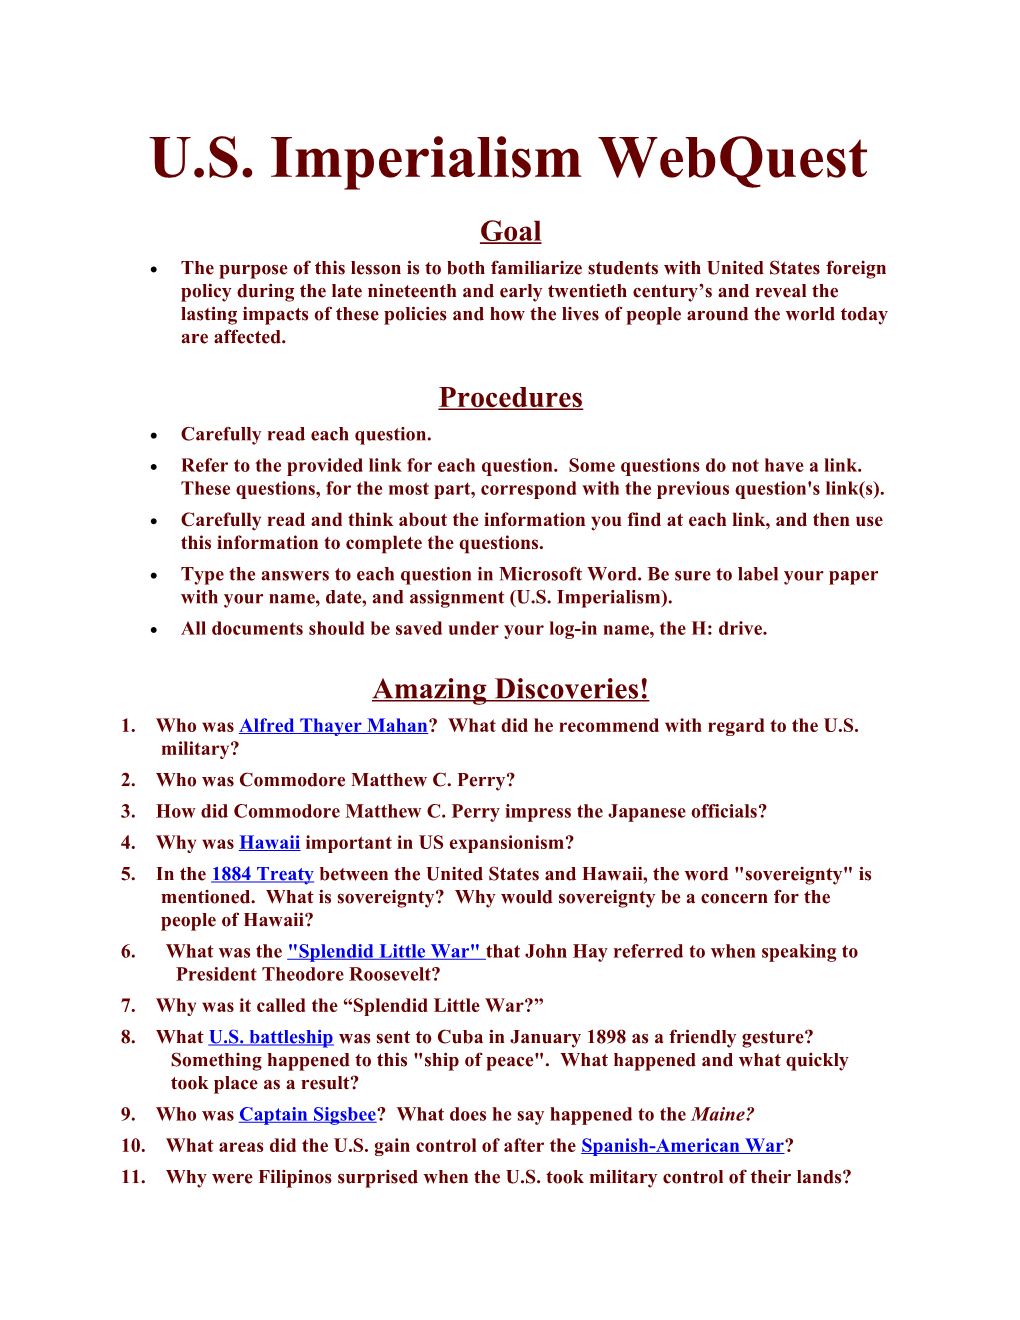 U.S. Imperialism Webquest